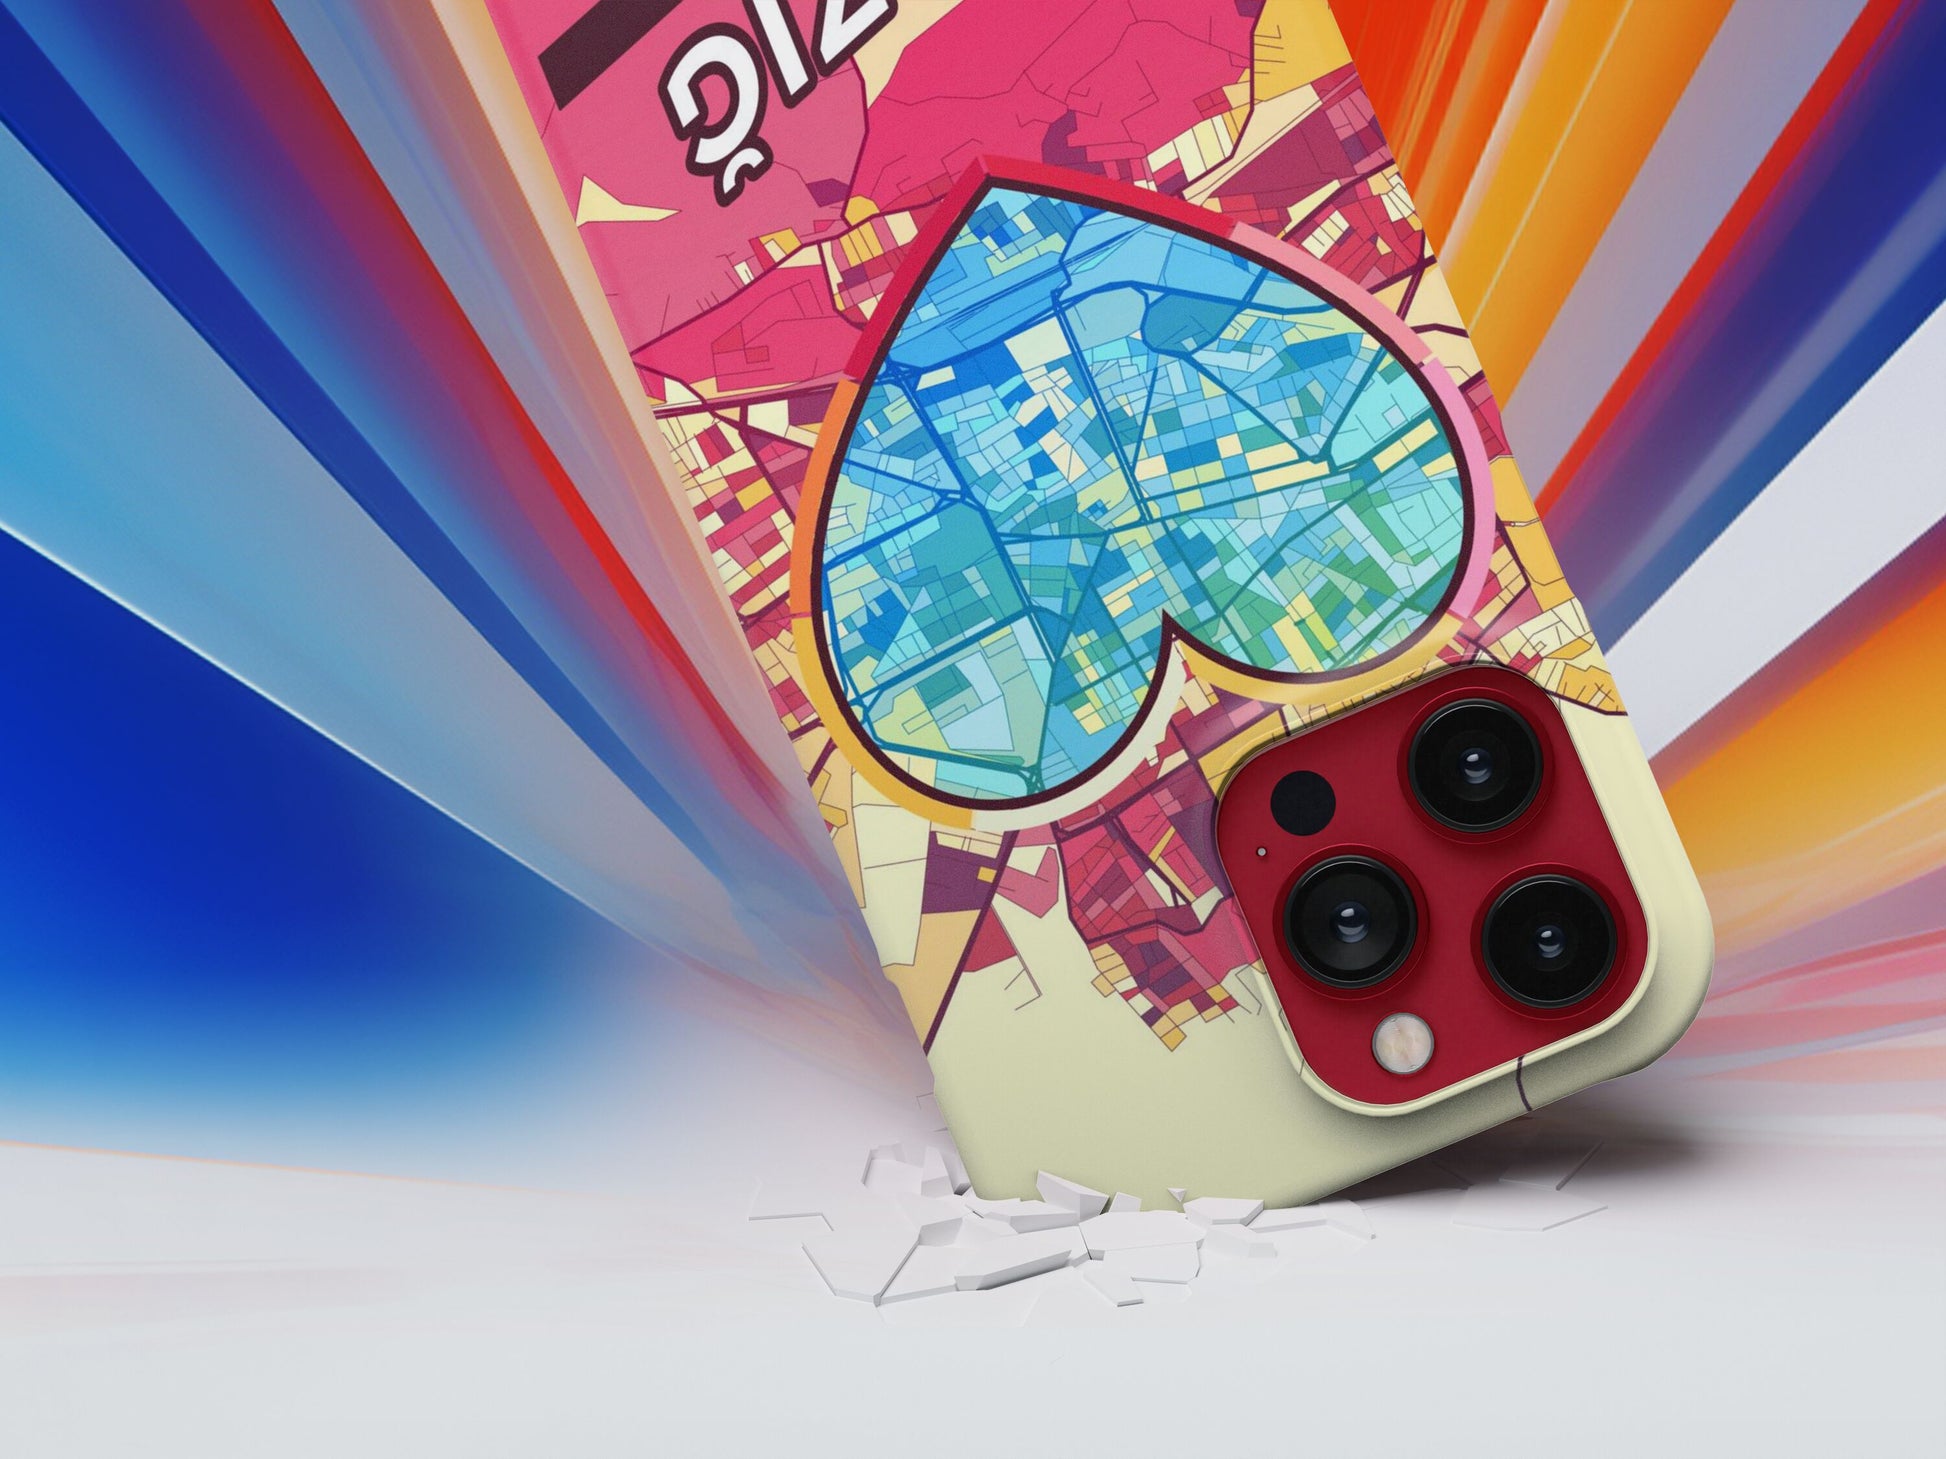 Elâzığ Turkey slim phone case with colorful icon. Birthday, wedding or housewarming gift. Couple match cases.